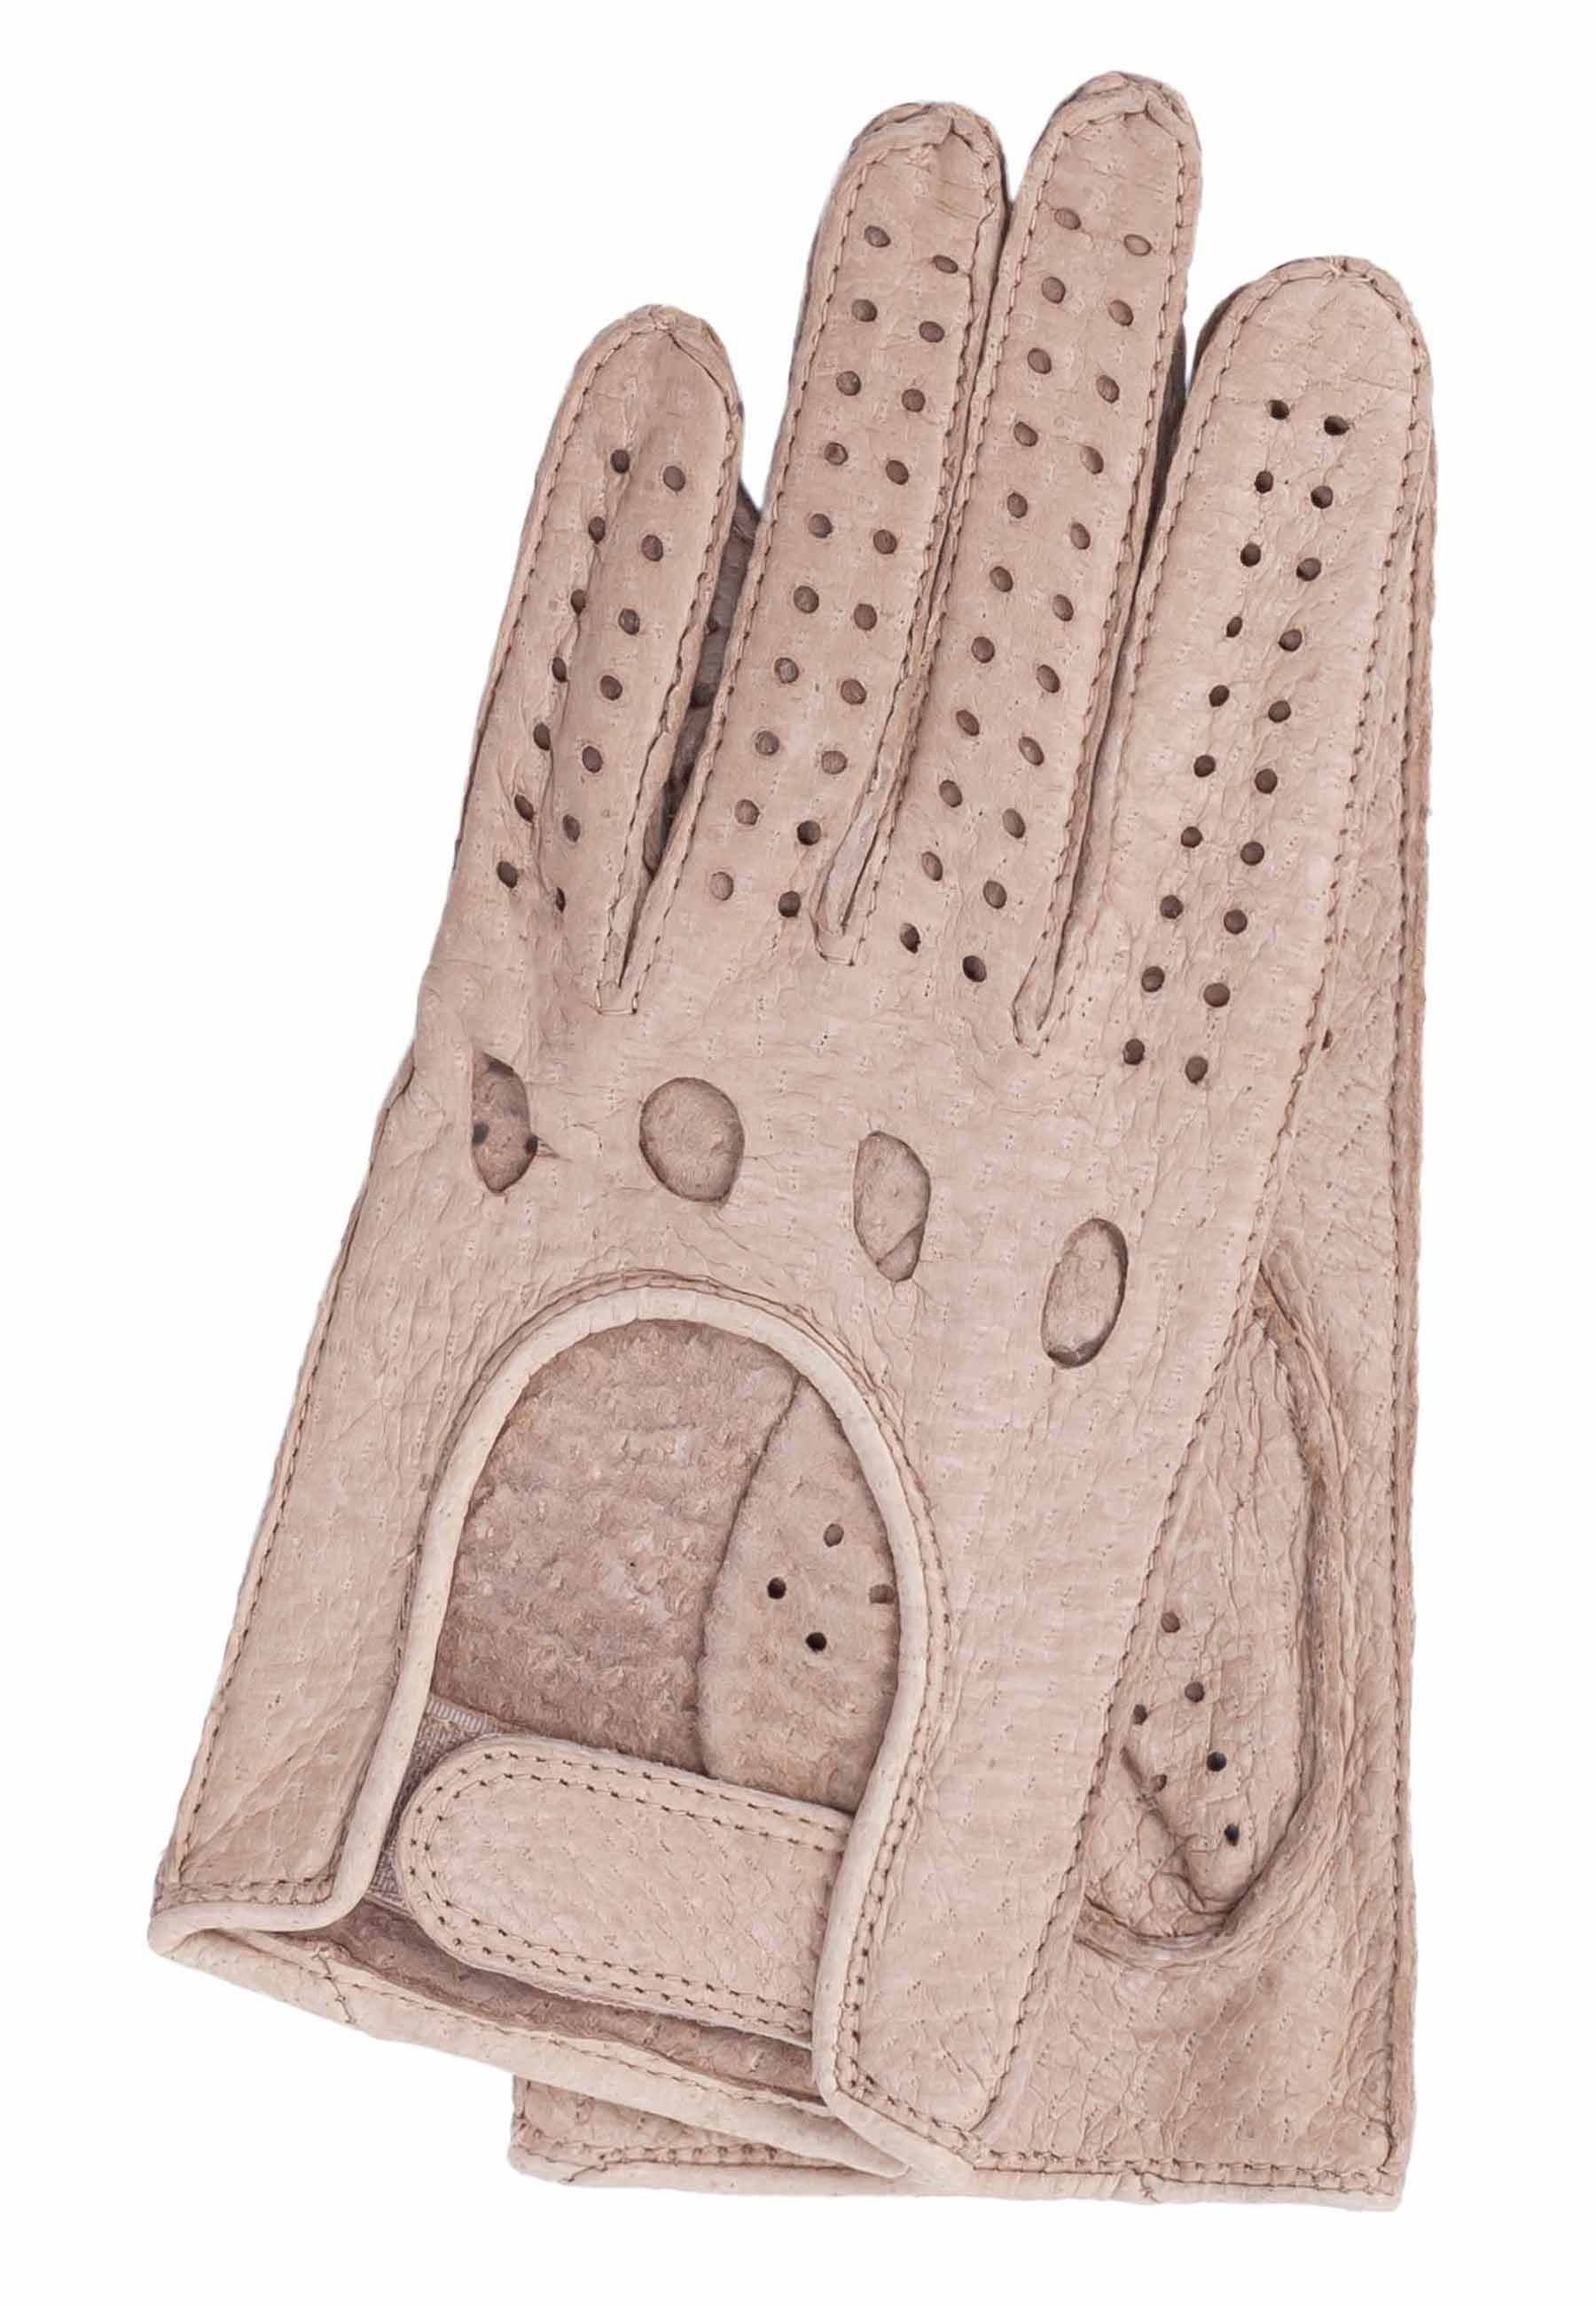 GRETCHEN Peccary Womens Gloves Driving Lederhandschuhe klassischem Autohandschuh-Design in